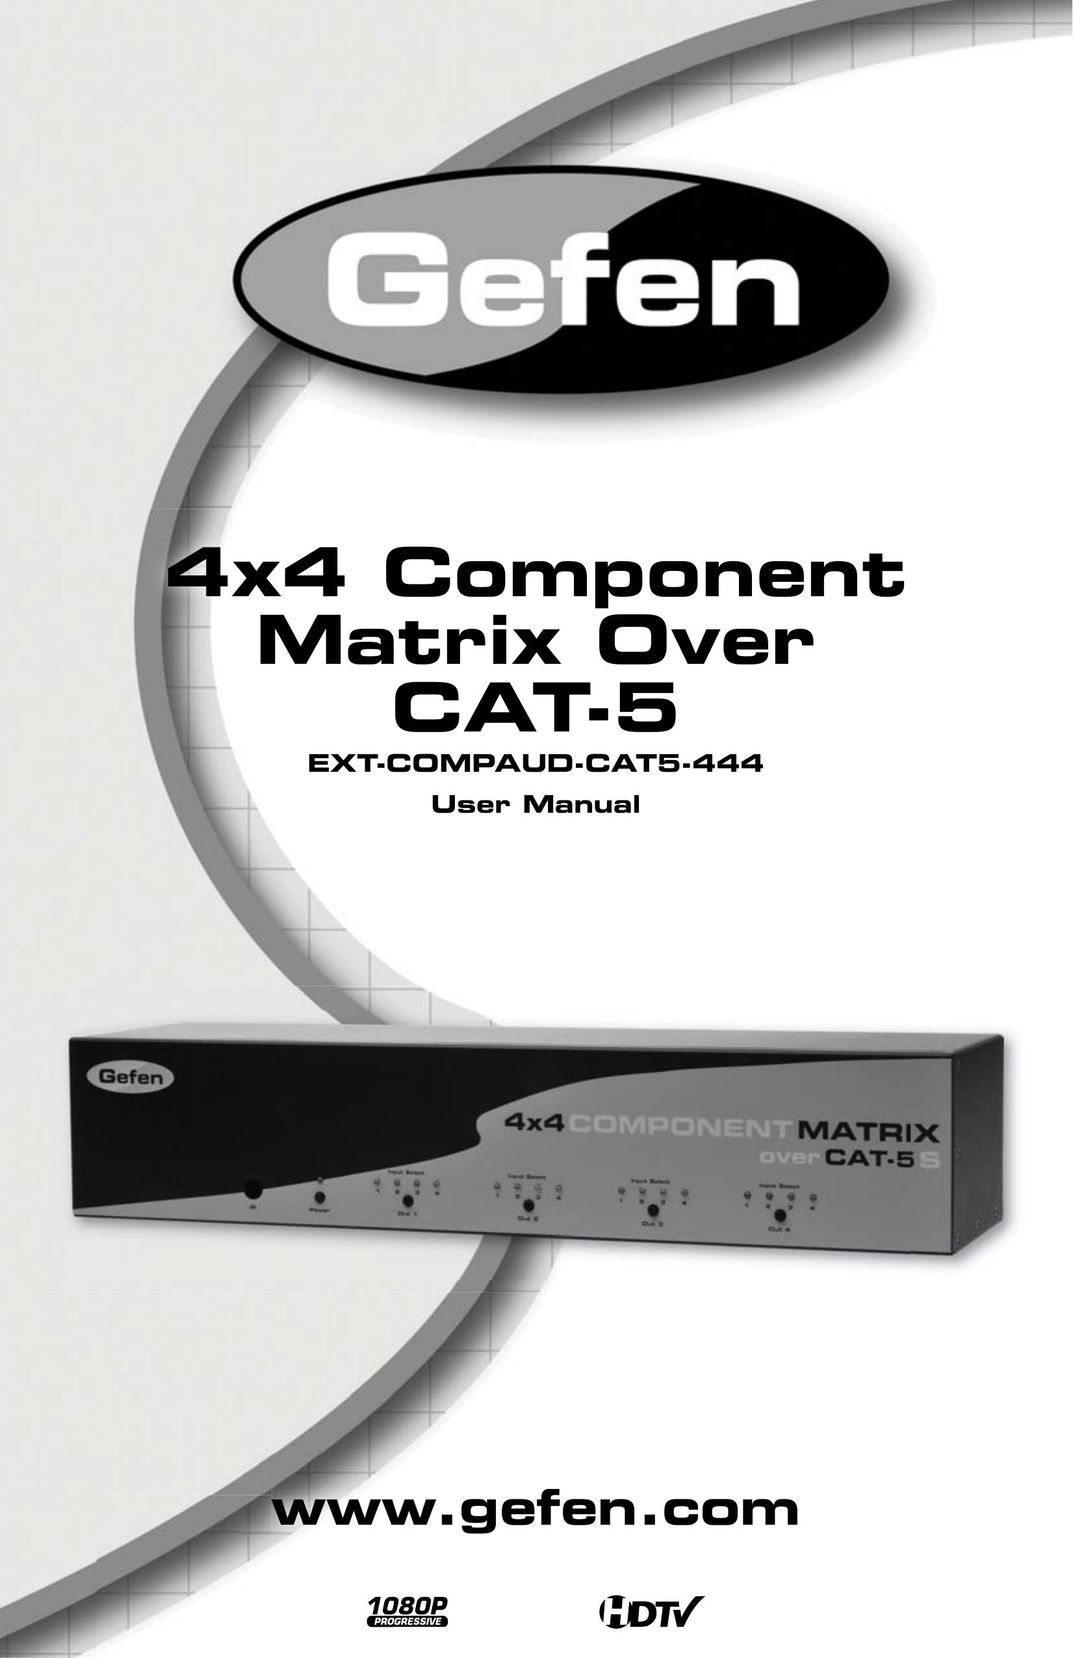 Gefen EXT-COMPAUD-CAT5-444 Network Router User Manual